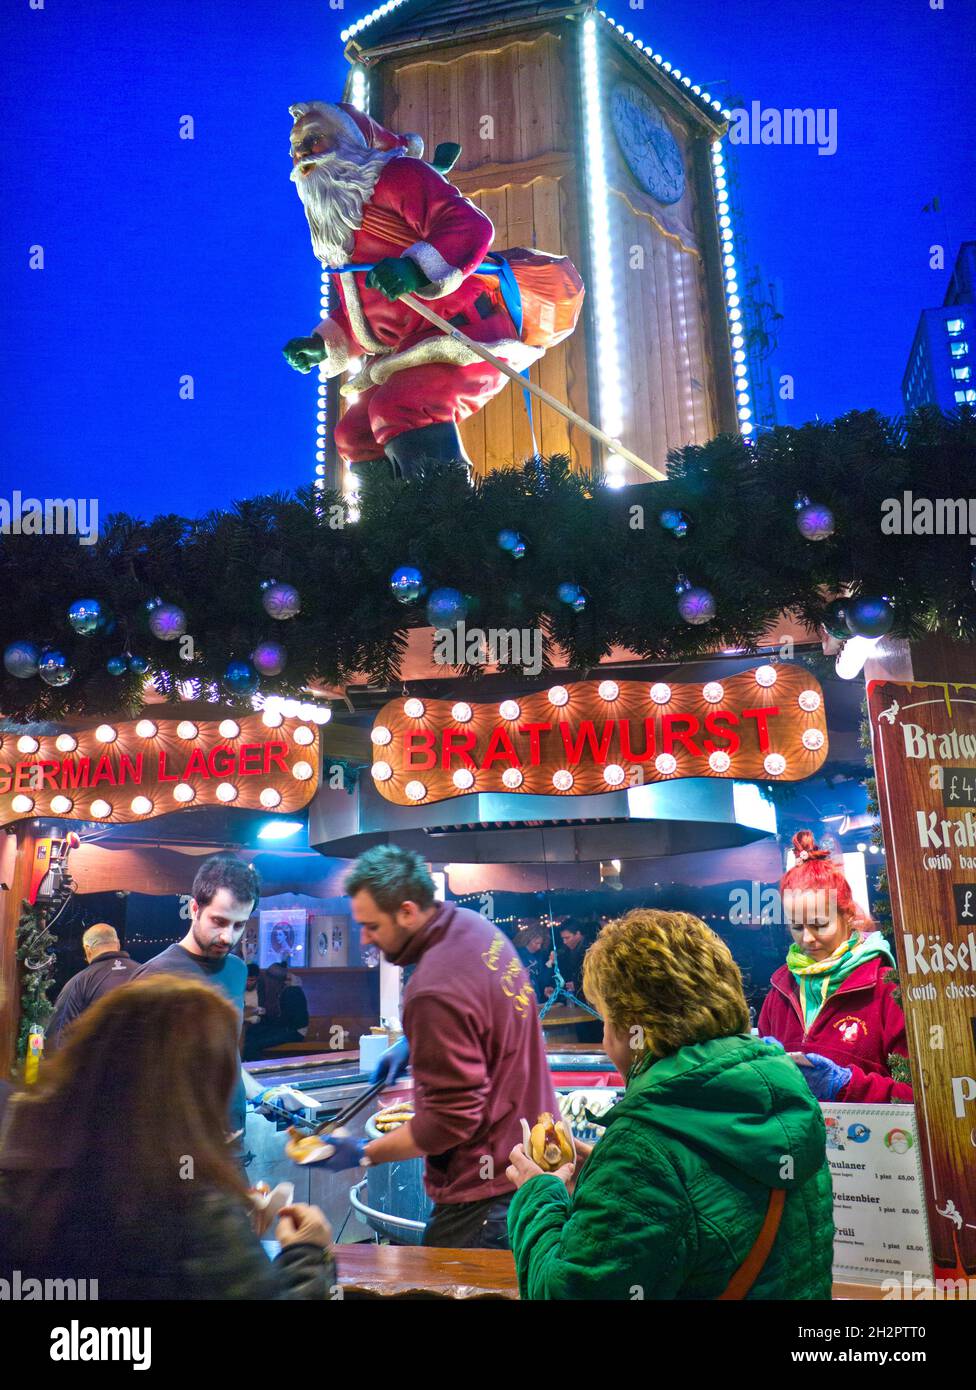 SOUTHBANK OUTDOOR TAKEAWAY GERMAN CHRISTMAS MARKET Food Stall German Christmas Market food stalla con sci Padre Natale illuminato di notte South Bank London UK Foto Stock